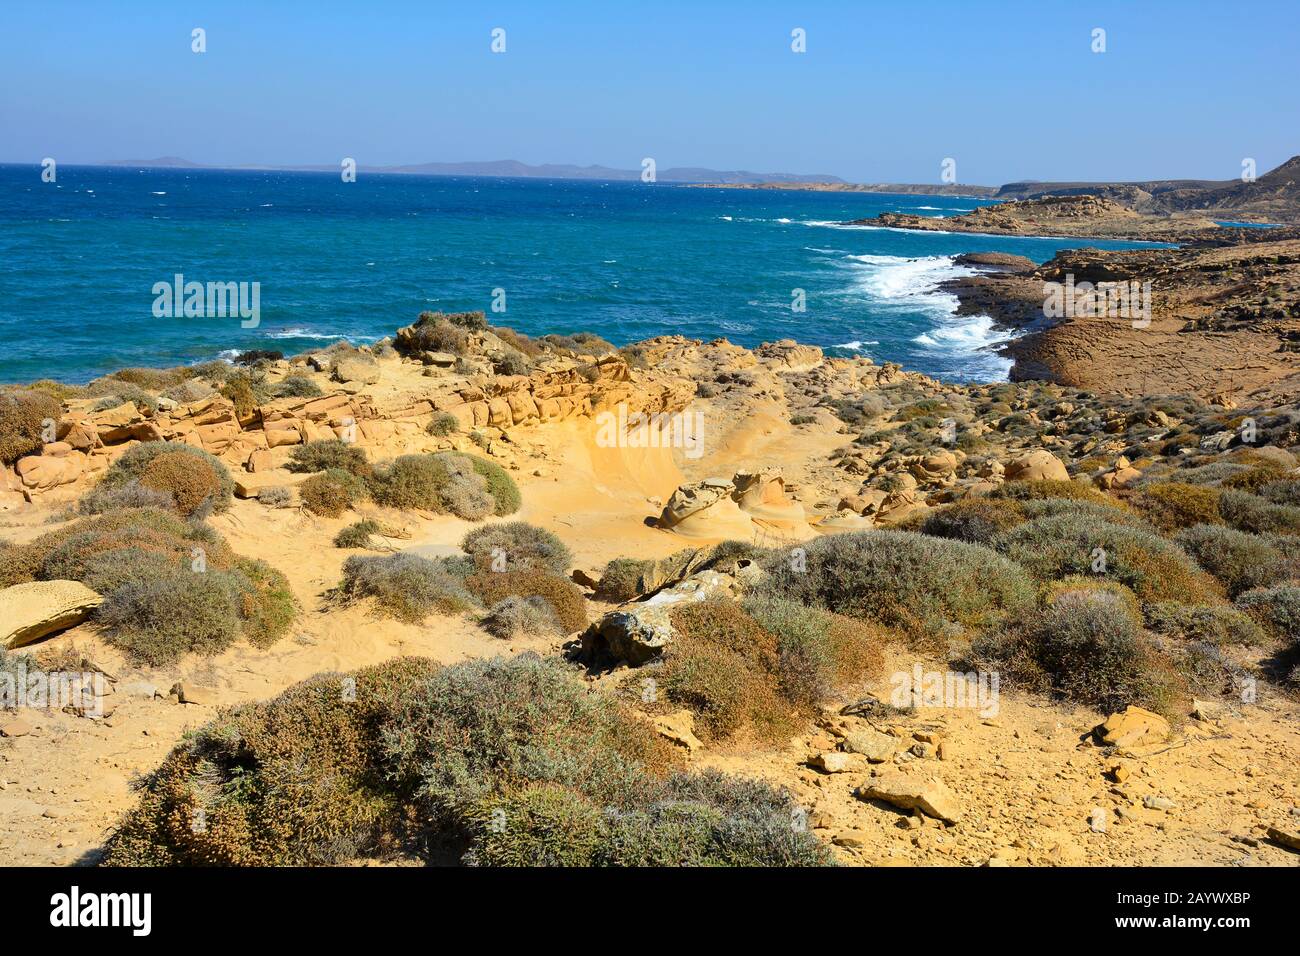 Greece, volcanic rocks and vegetation in Lemnos Island Stock Photo